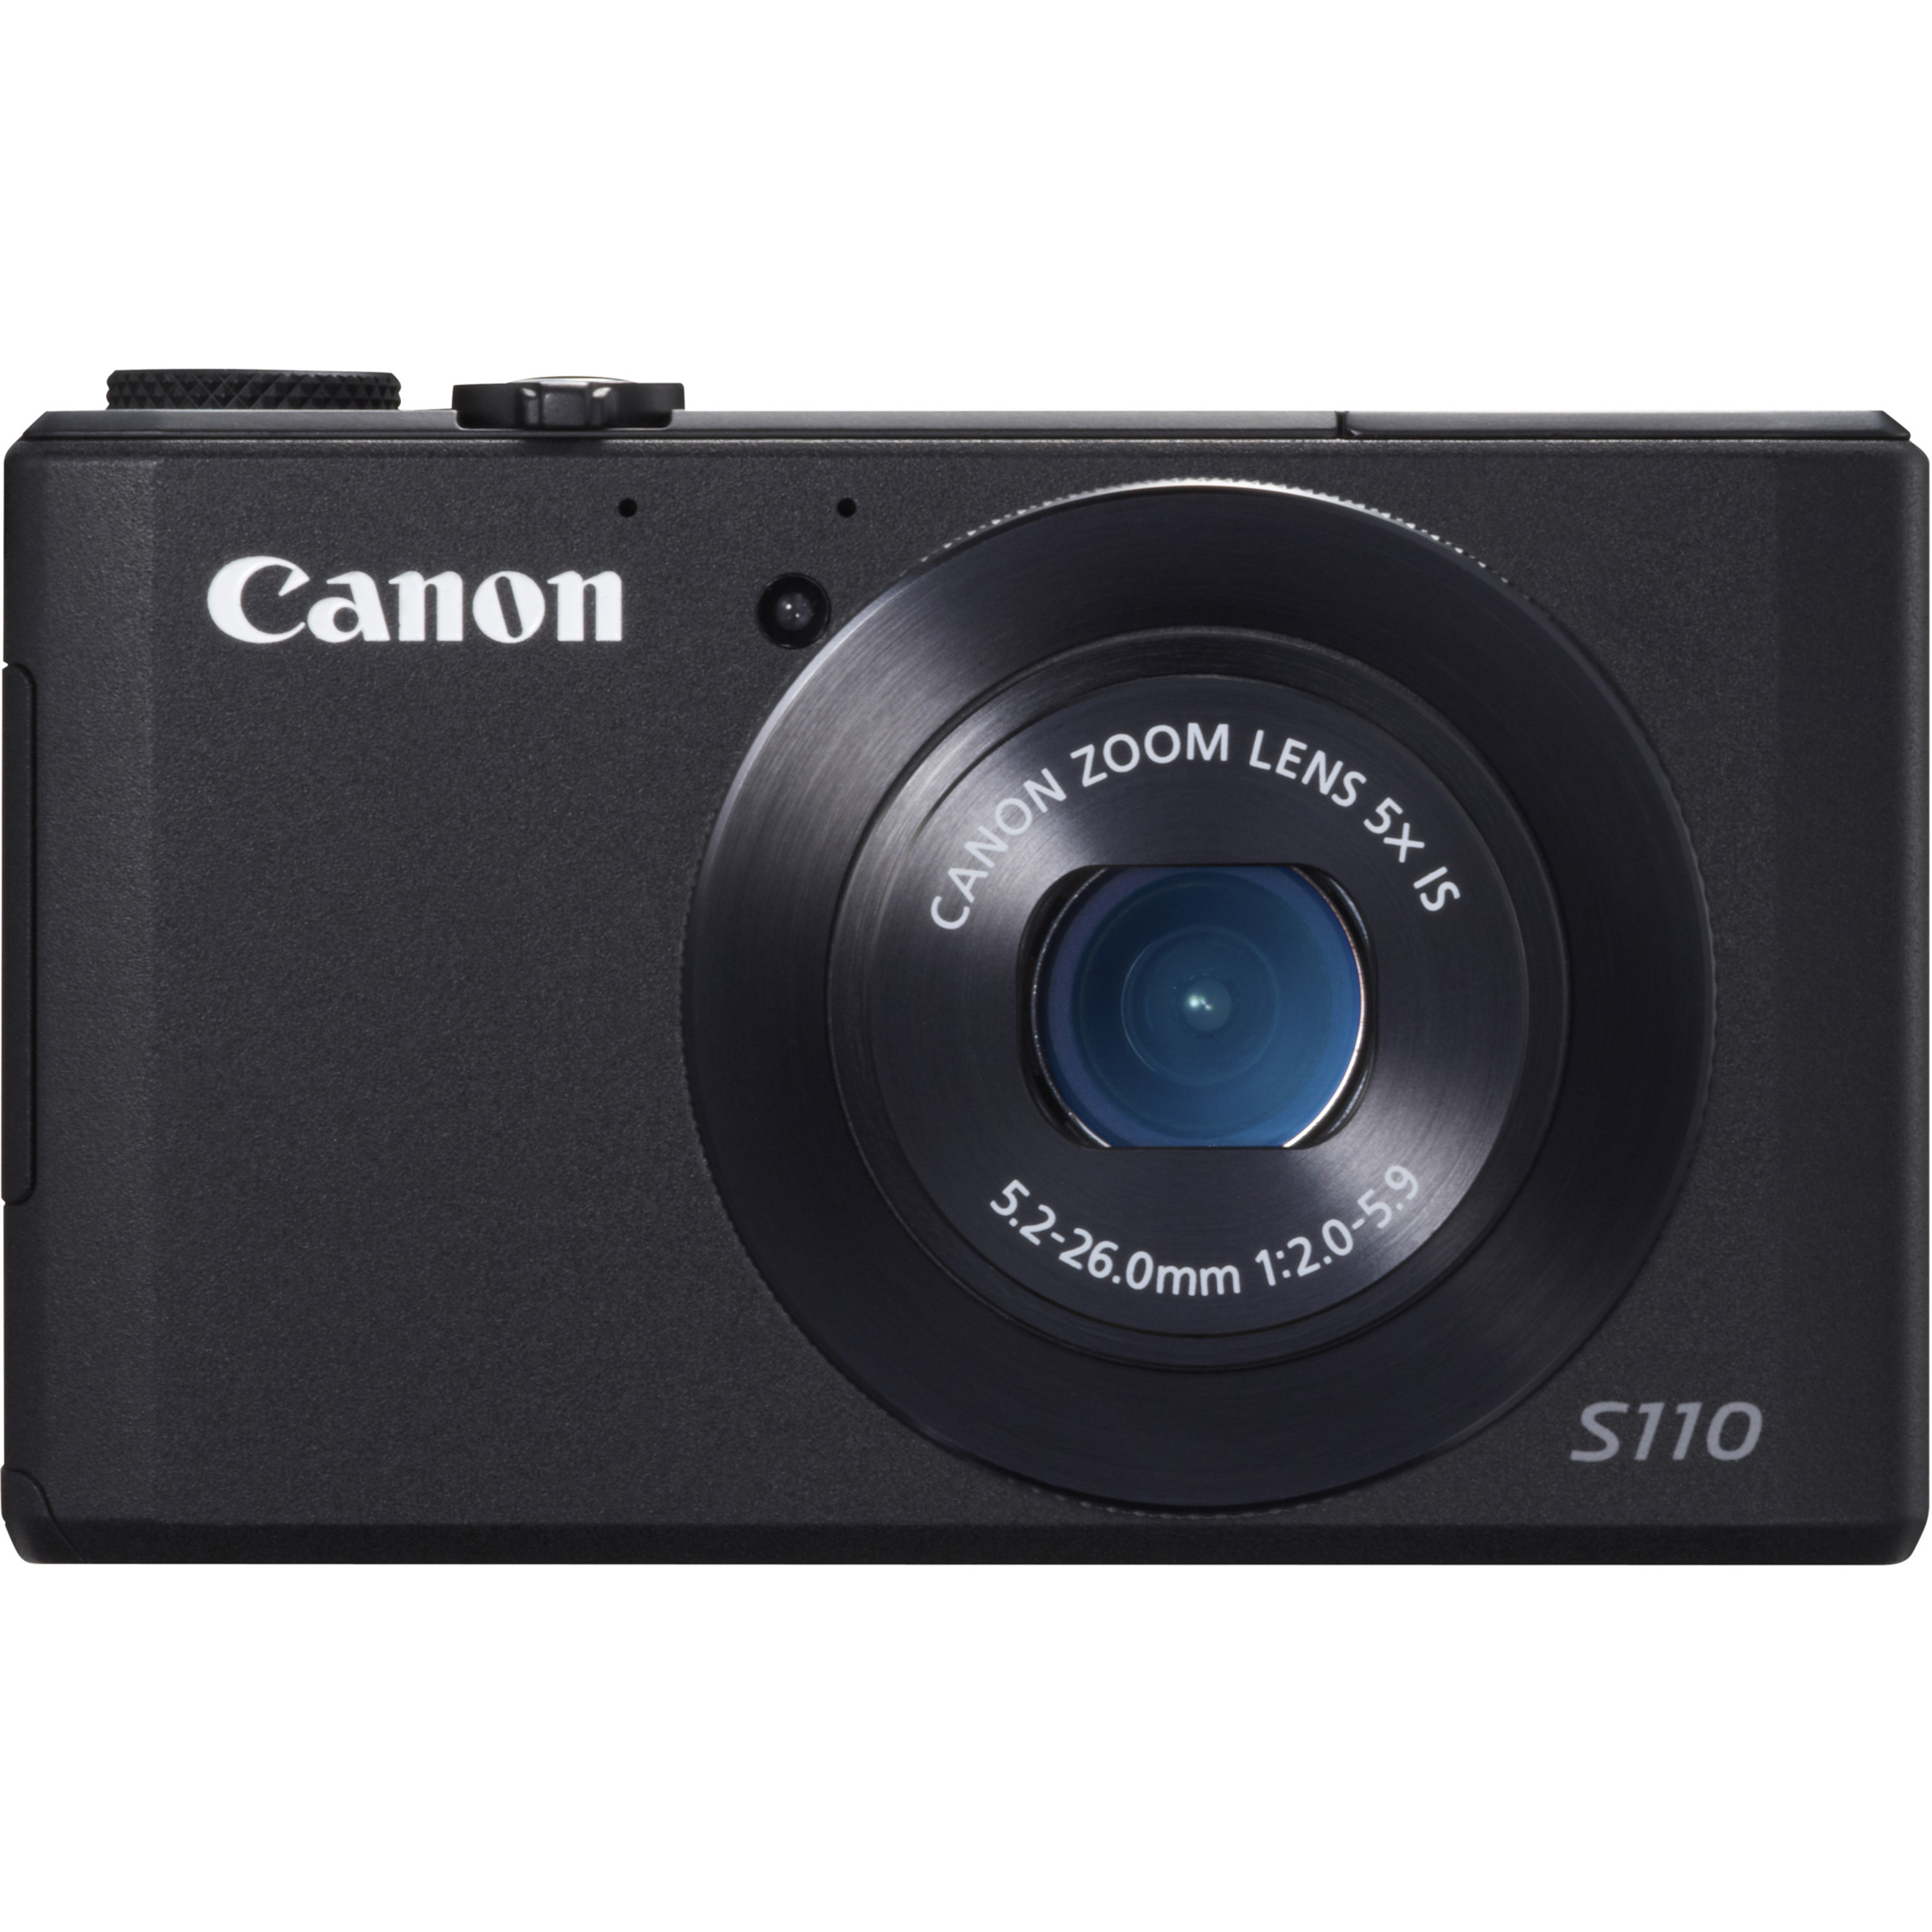 Canon PowerShot S110 12.1 Megapixel Compact Camera, Black - image 1 of 5